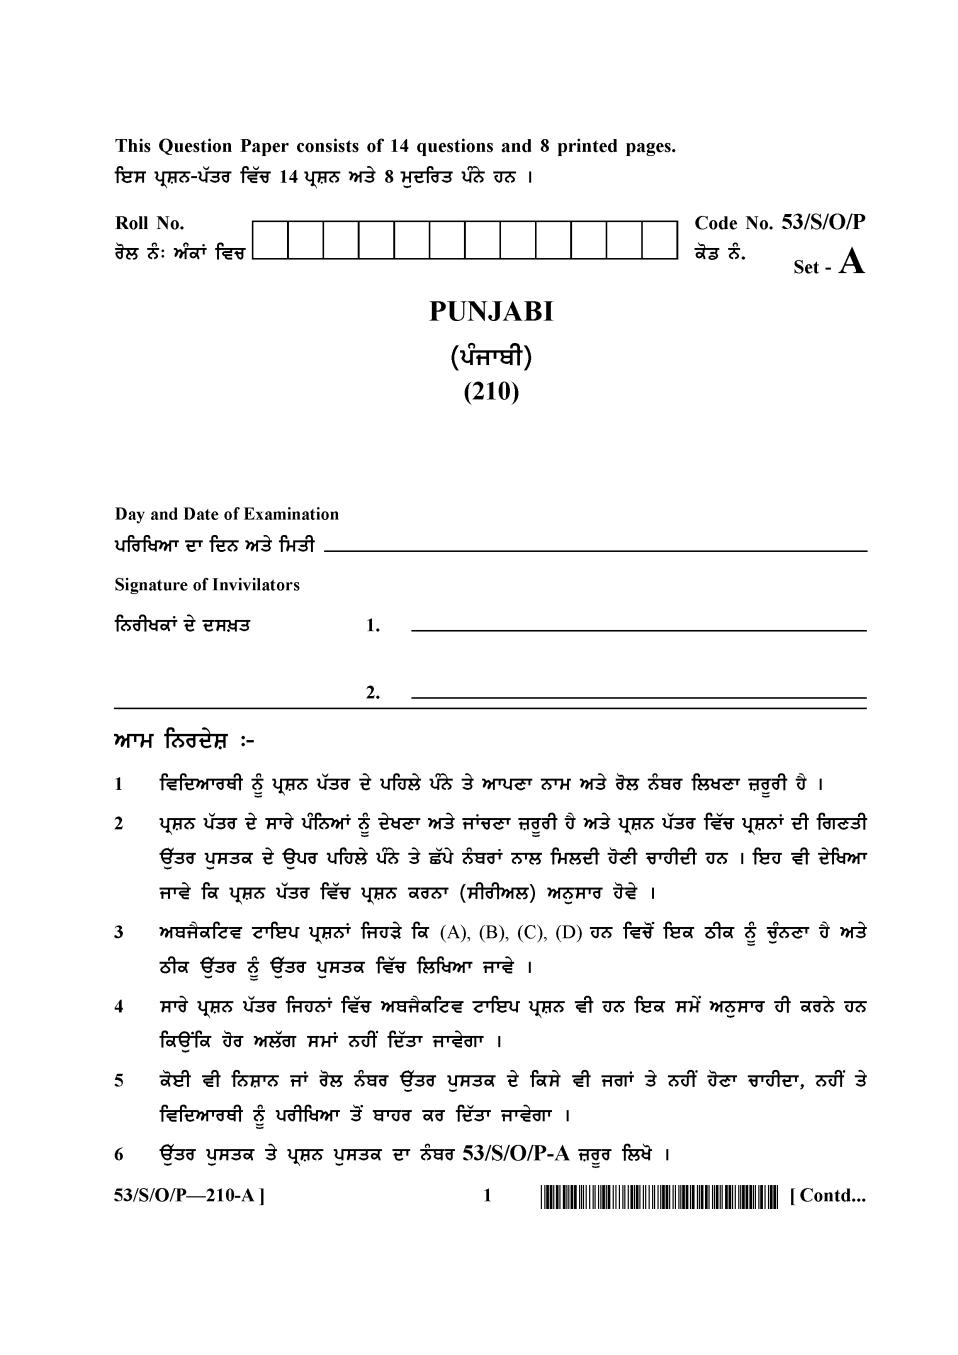 NIOS Class 10 Question Paper Oct 2016 - Punjabi - Page 1